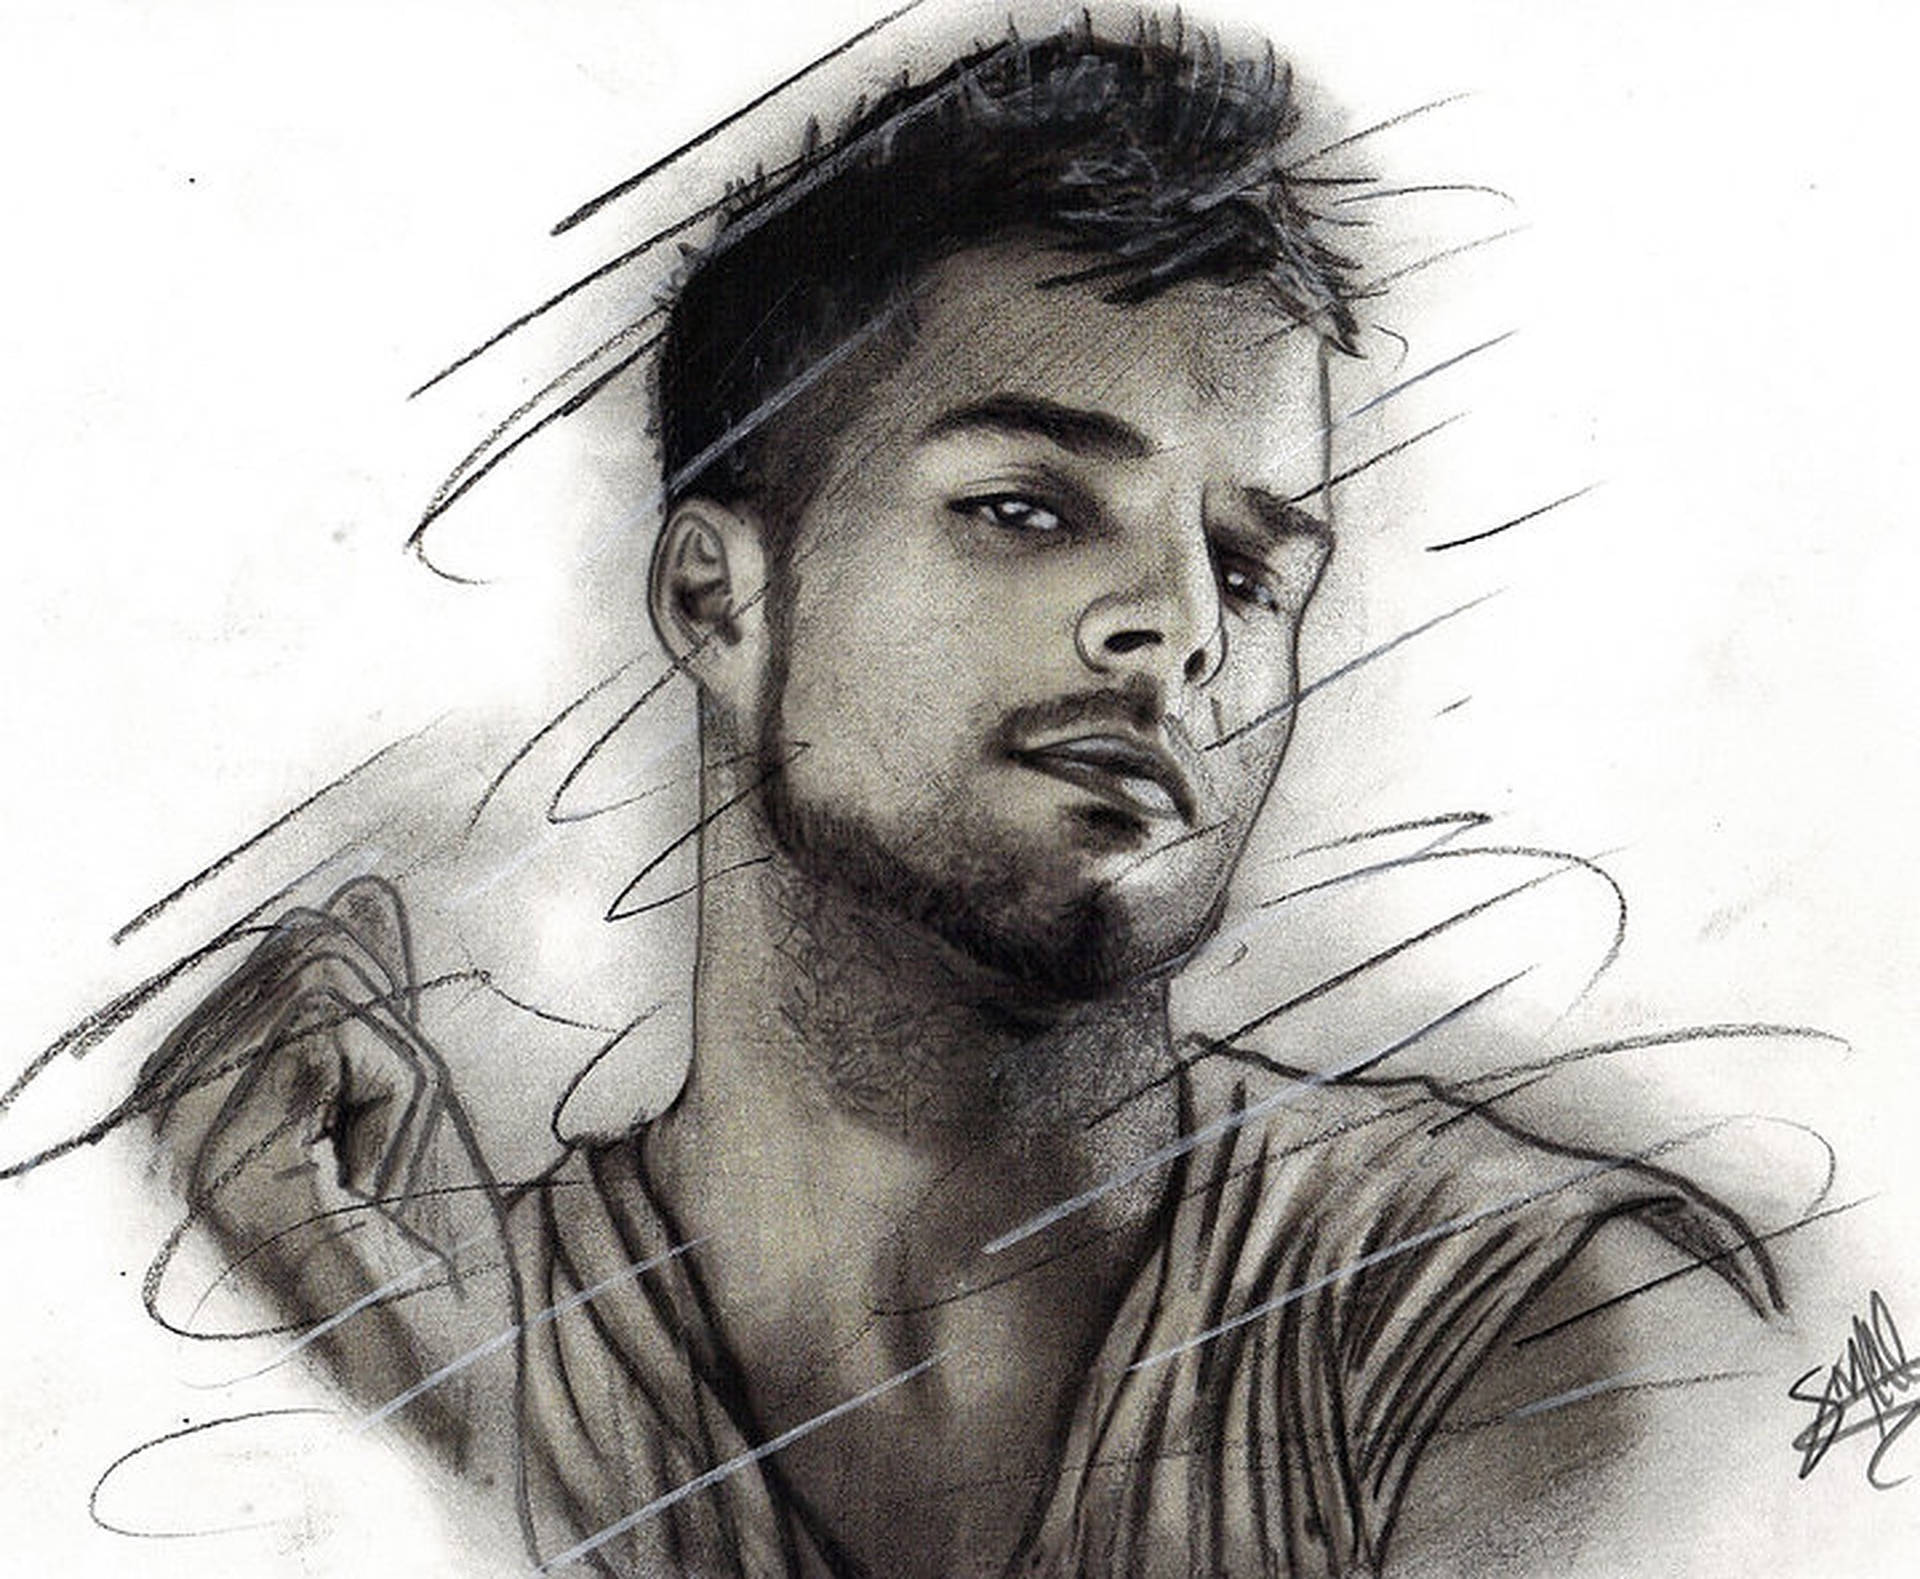 Ricky Martin Digital Art Sketch Background